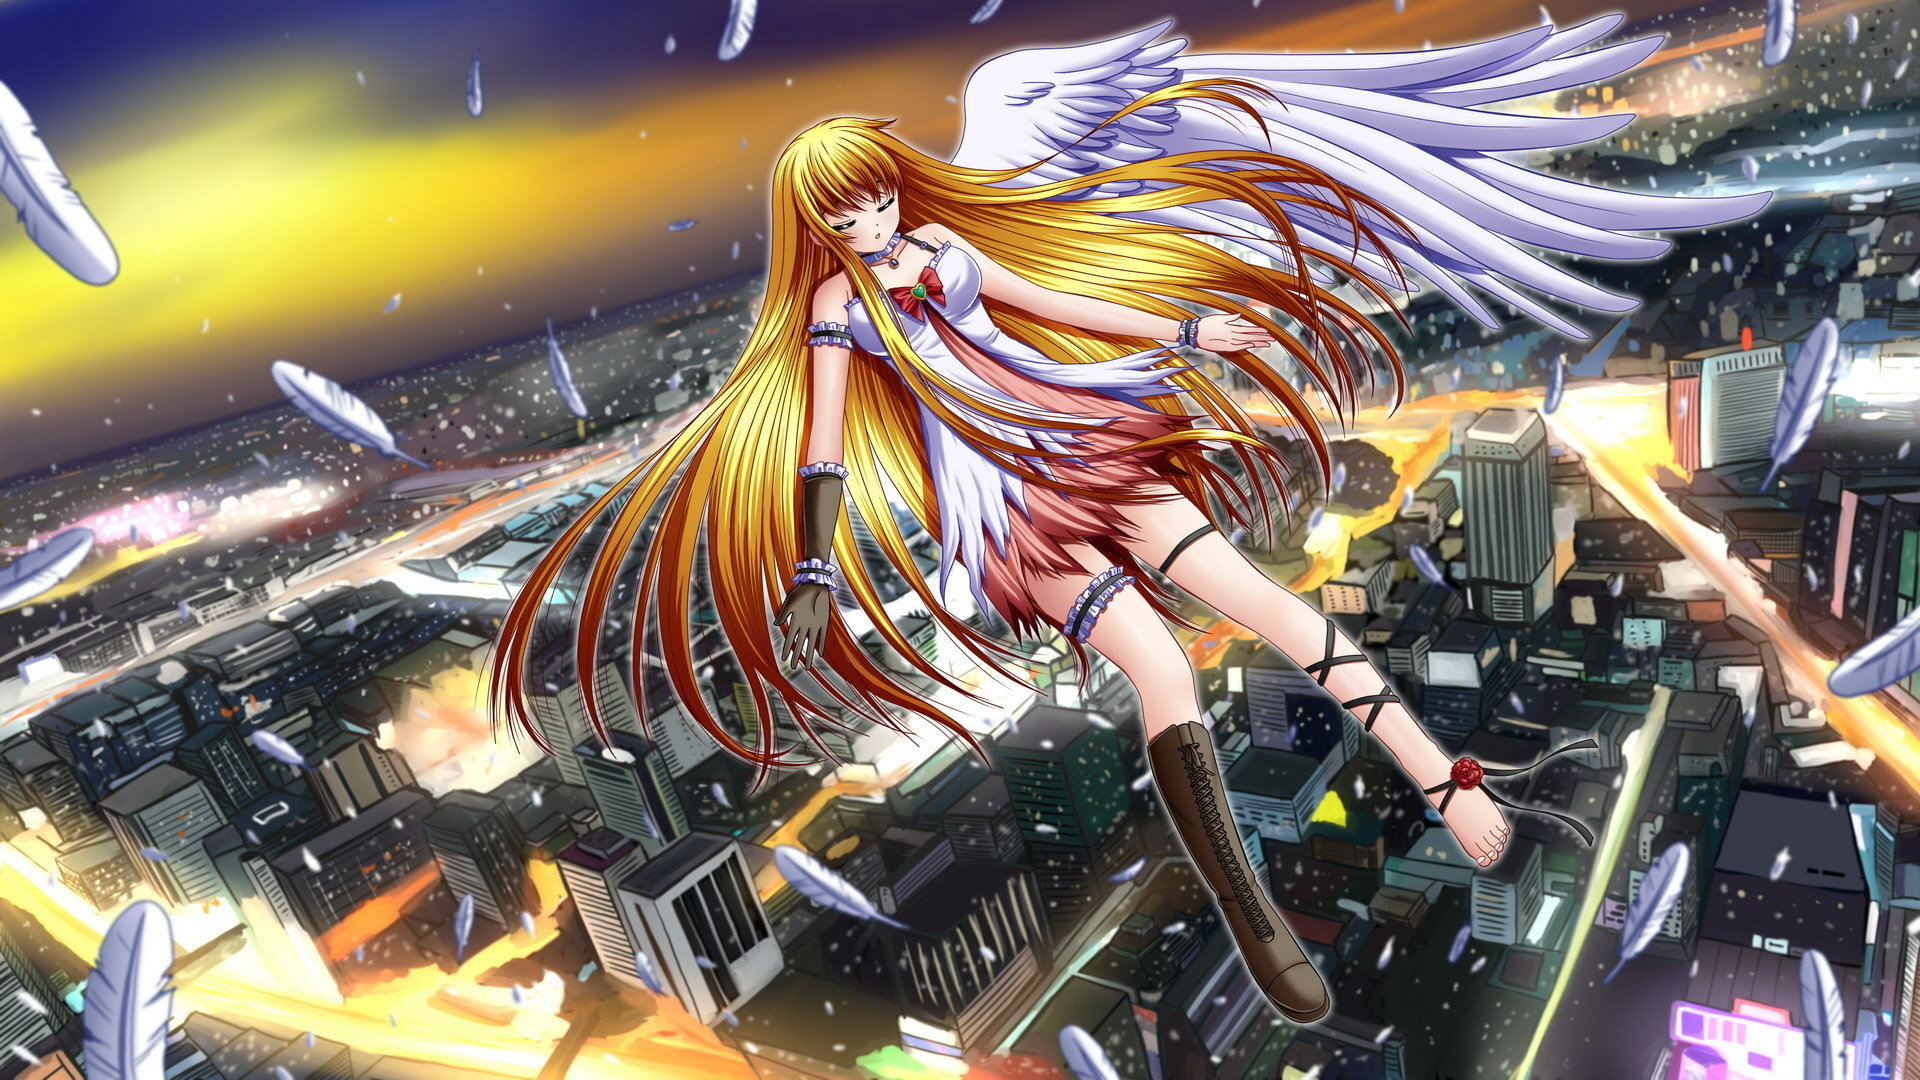 Best Angel Anime Wallpaper Id - High Quality Anime Wallpaper Hd 1080p -  1920x1080 Wallpaper 